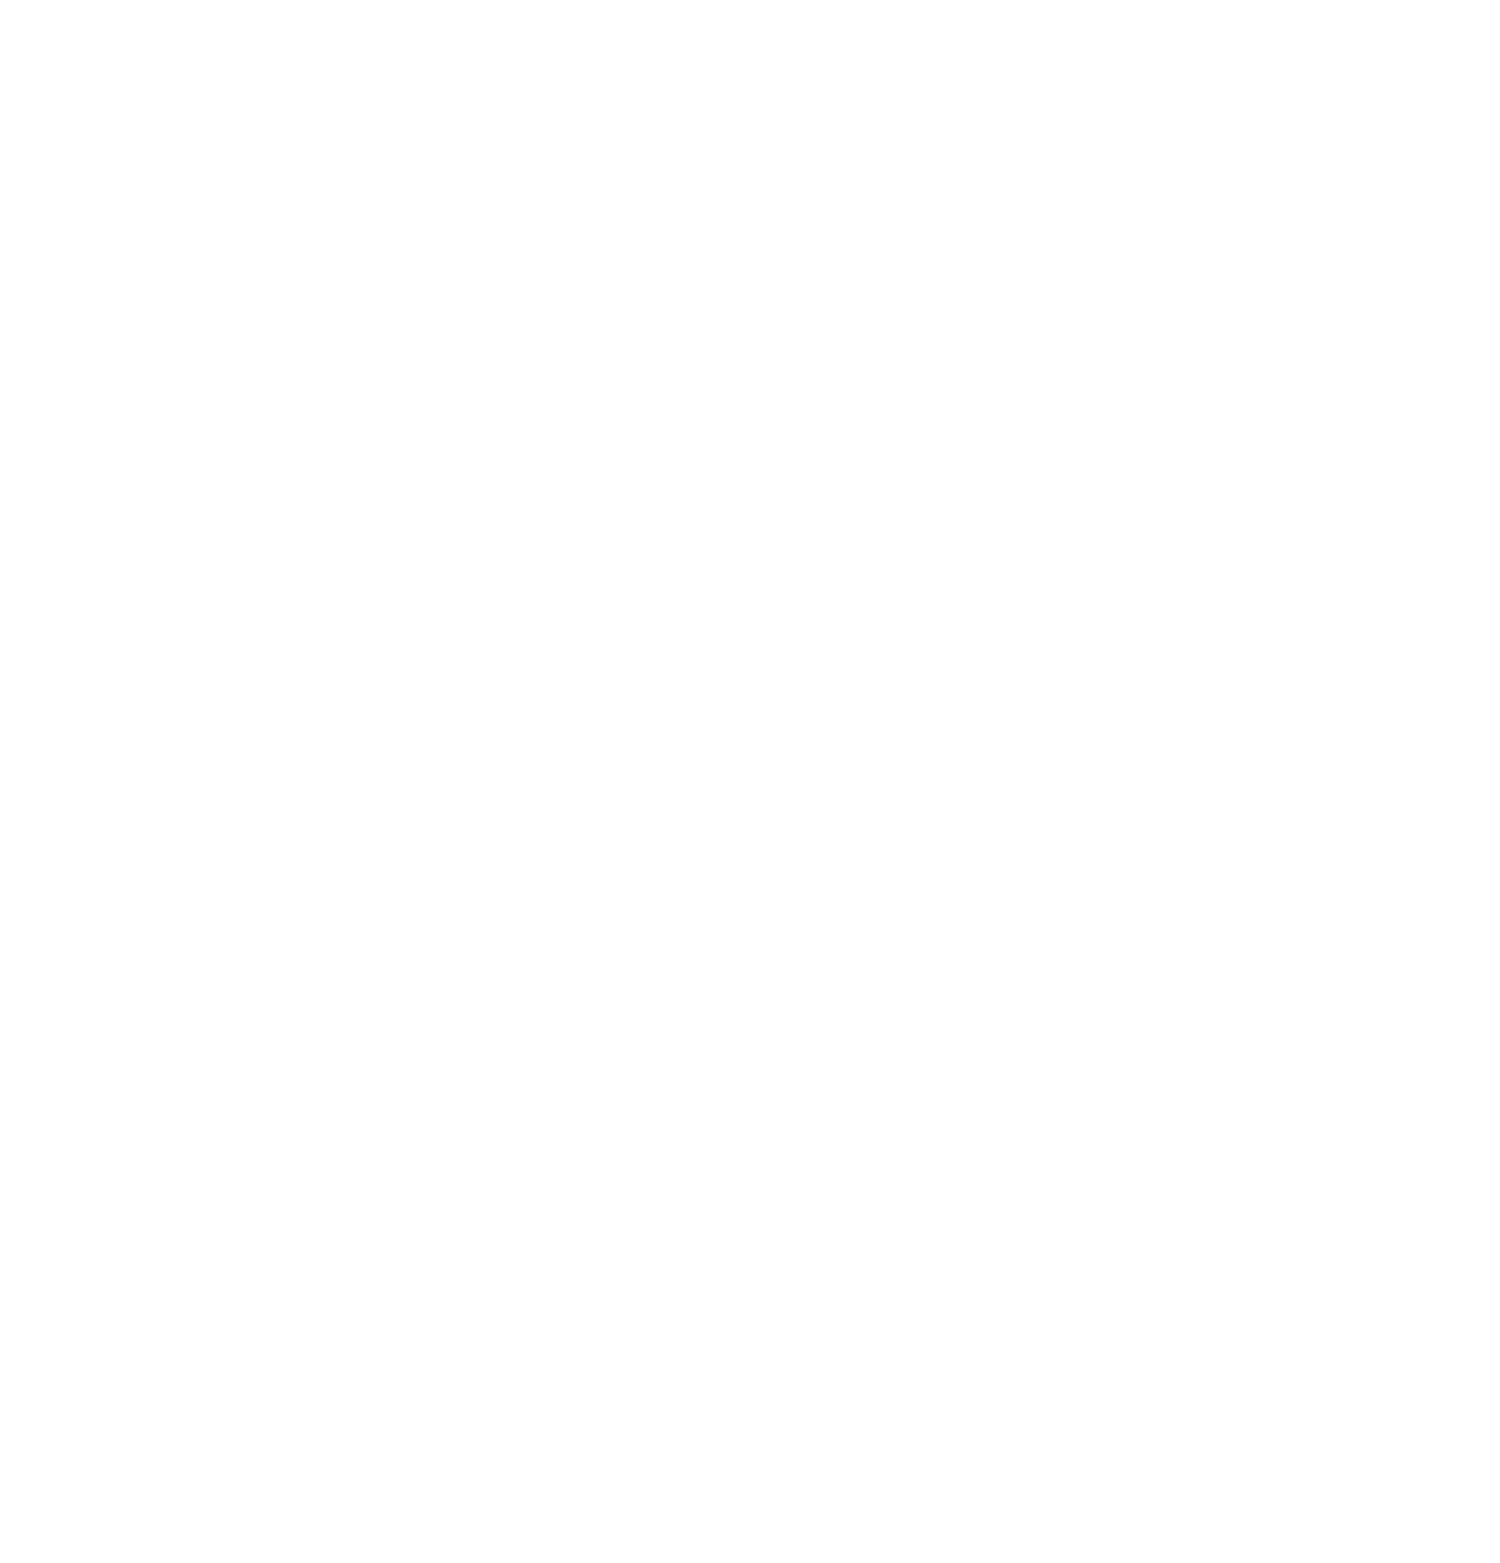 Rockport Film Festival